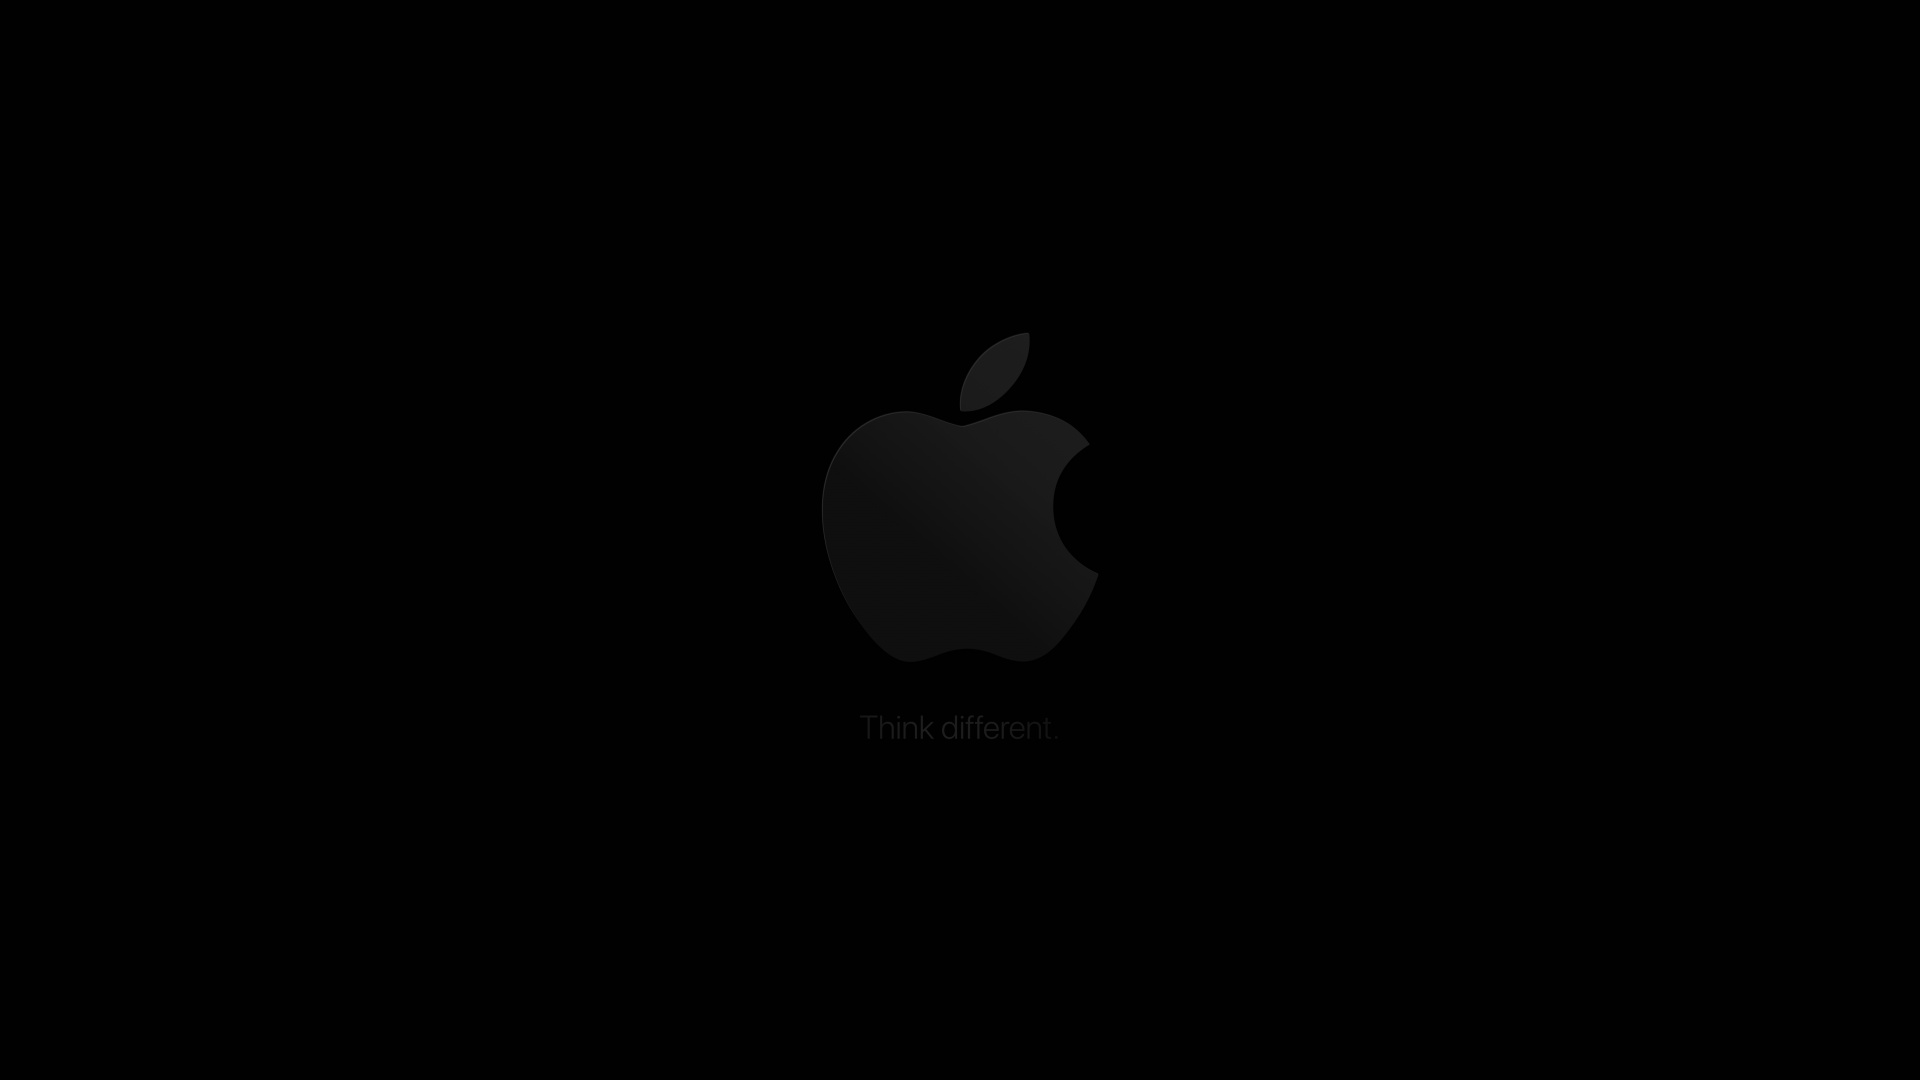 Apple logo Wallpaper 4K, Think different, Minimal logo, 5K